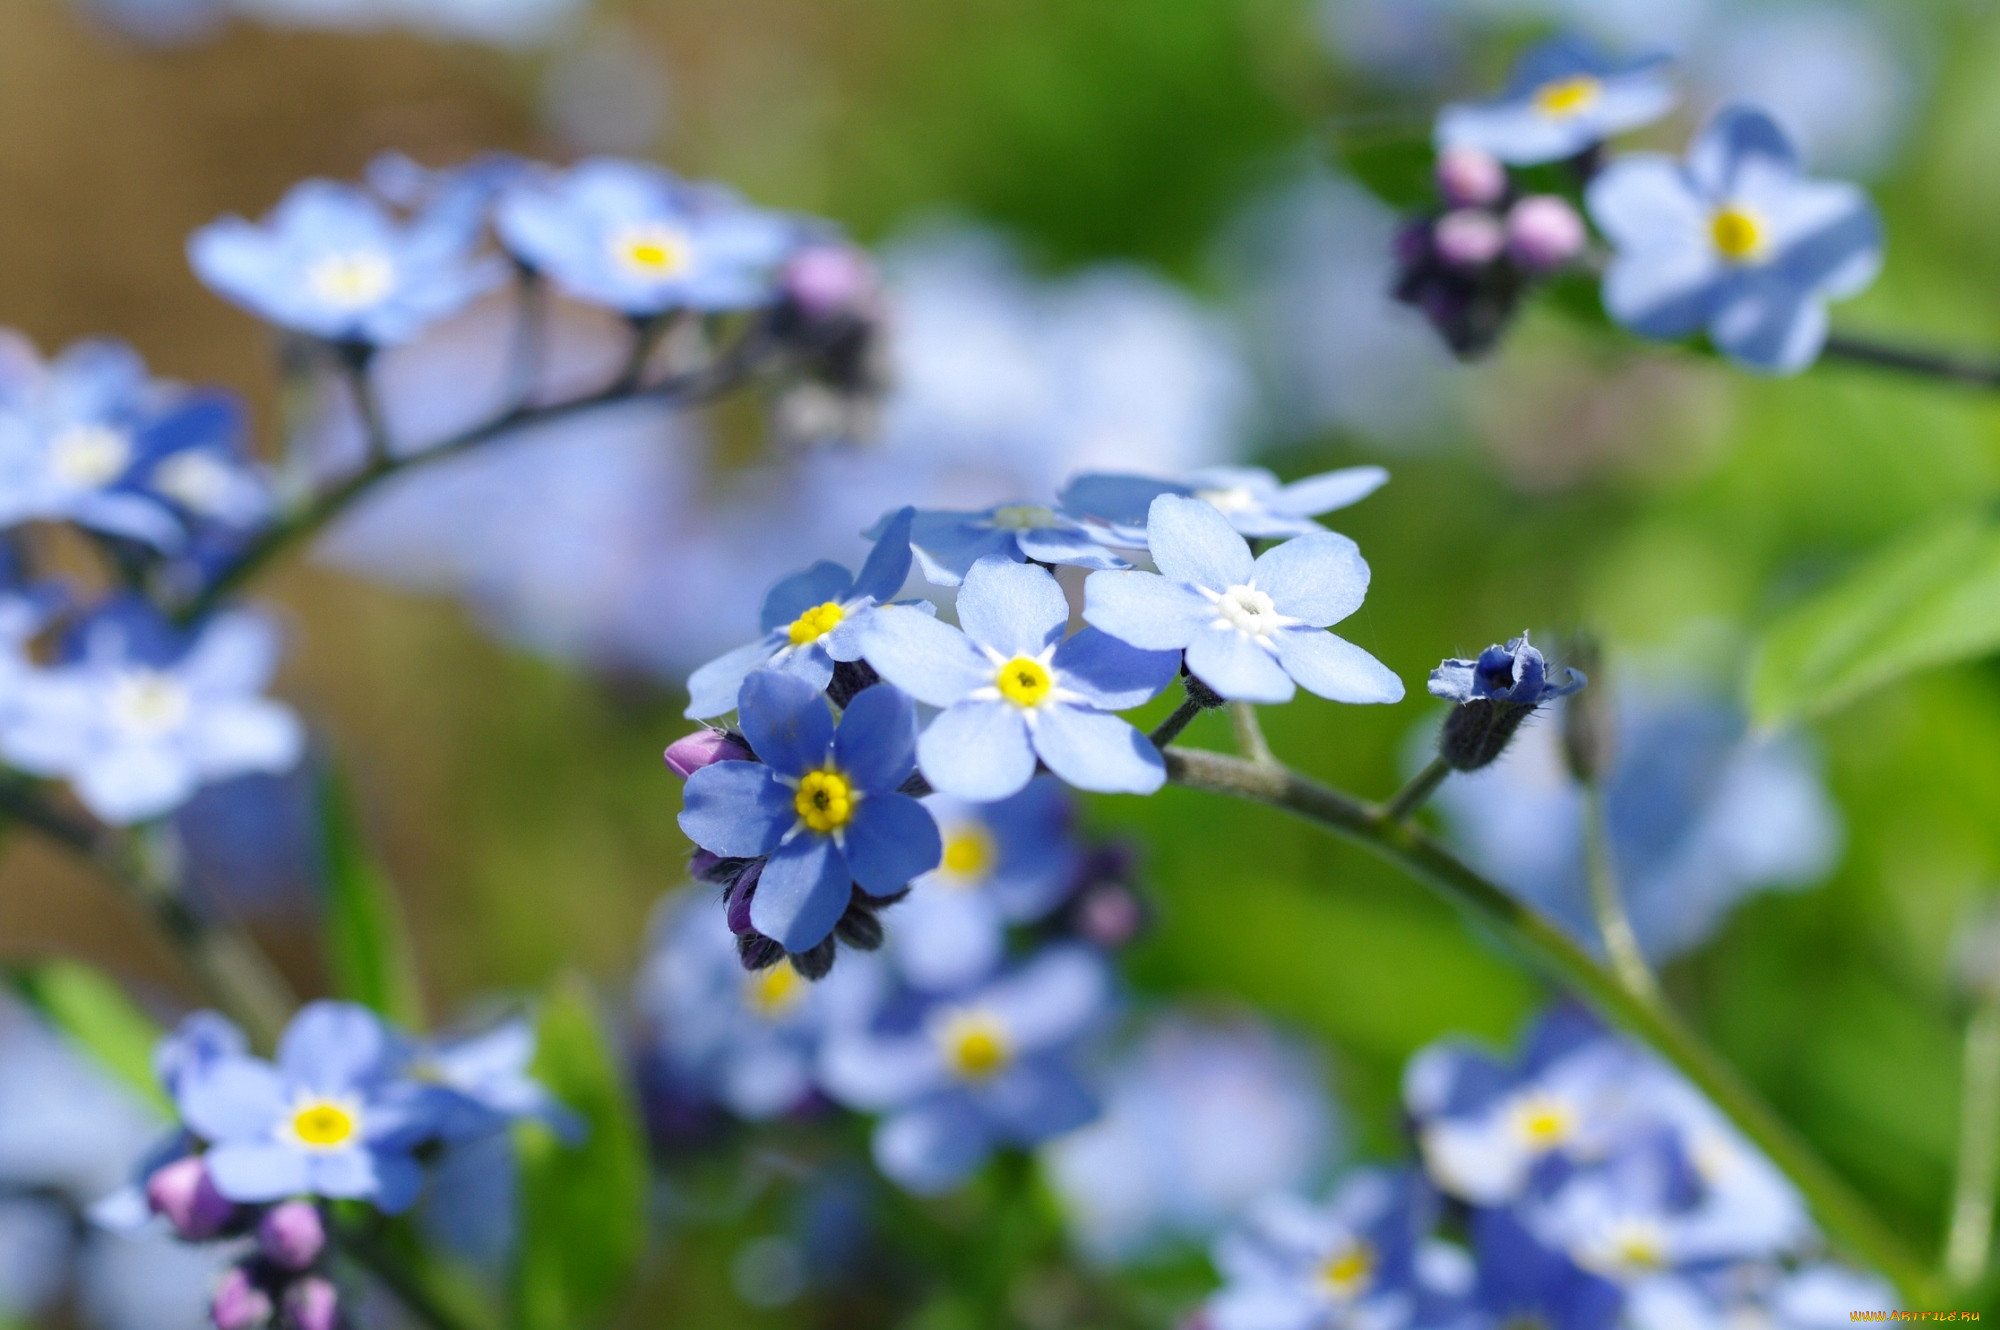 Незабудка пиши. Цветы незабудки. Голубые цветы незабудки. Незабудки весной. Весенние цветы незабудки.